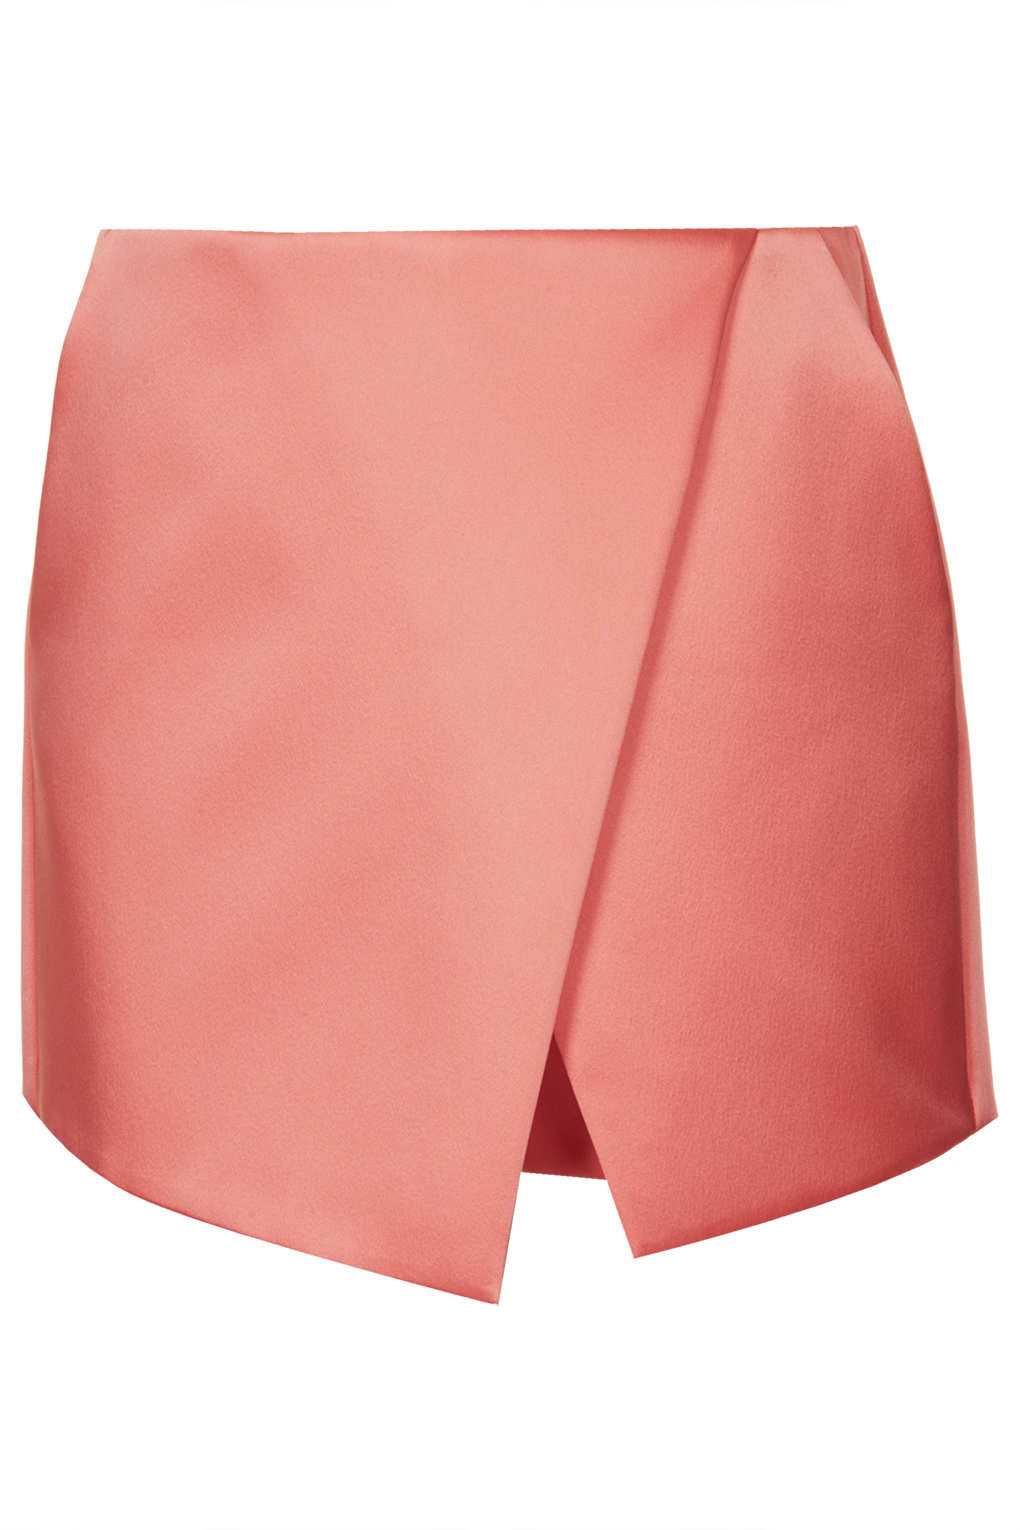 Topshop, Watermelon Wrap Skirt, 399 kronor